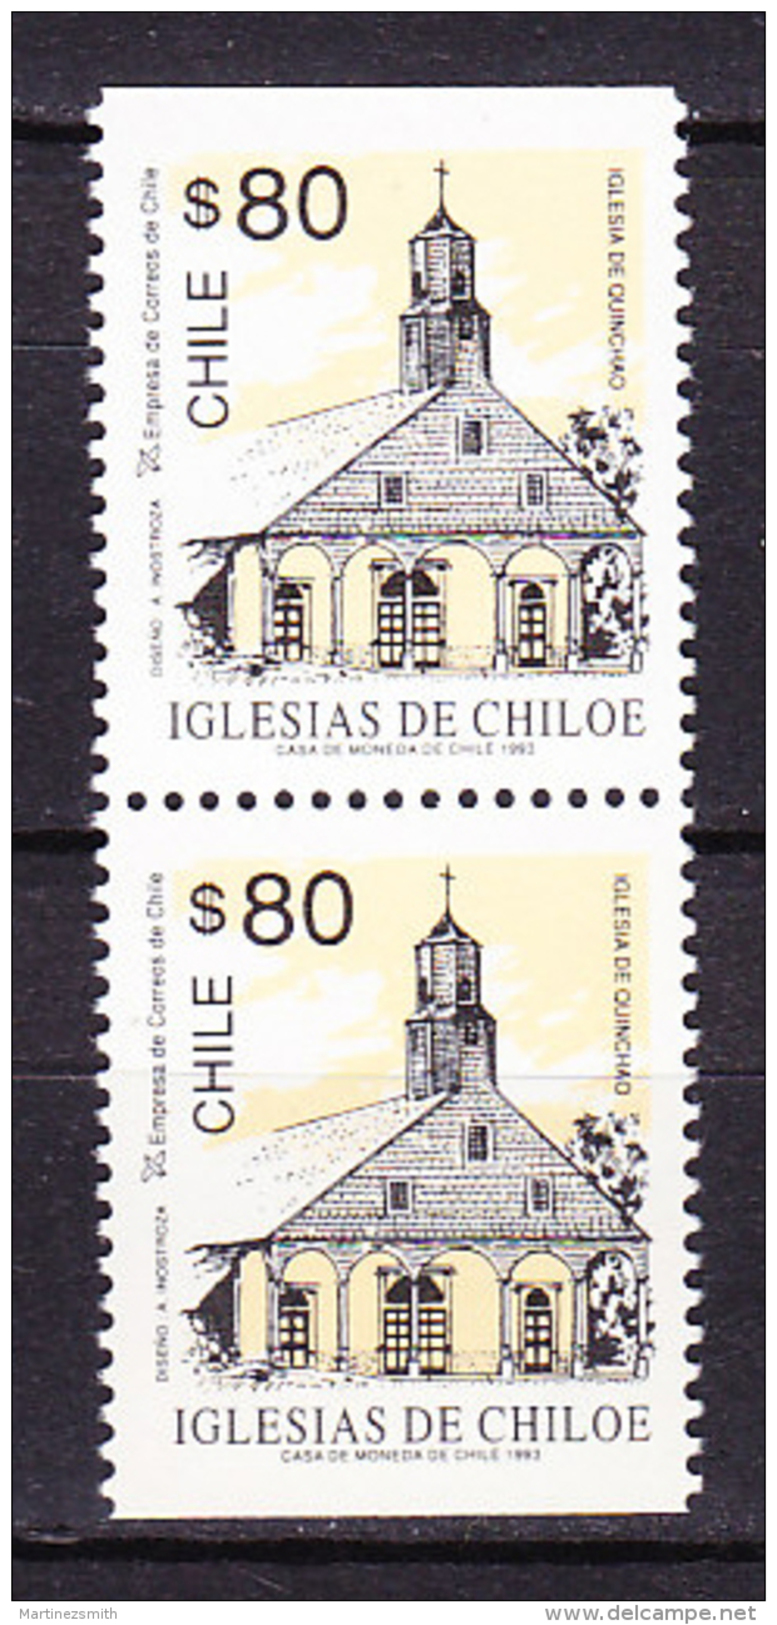 Chile - Chili 1993 Yvert 1170a, Definitve, Chilean Churches - MNH - Chile